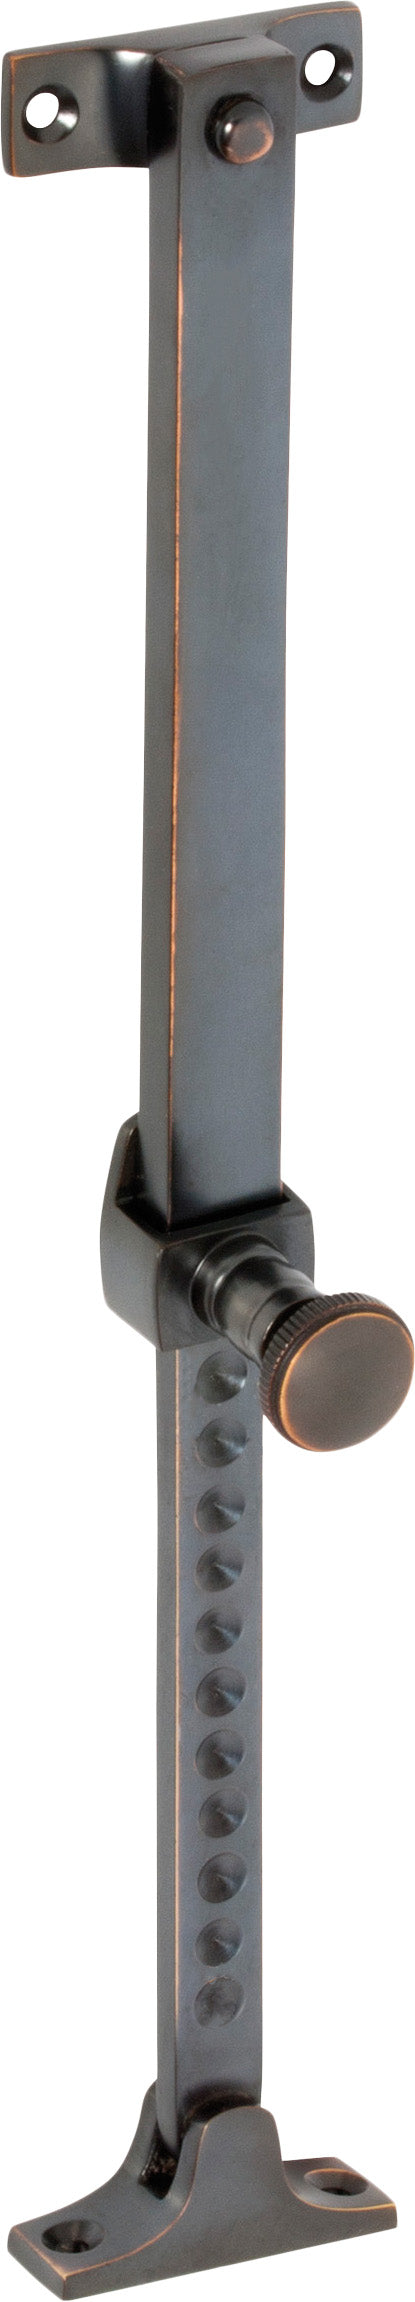 Casement Stay Telescopic Screw Down Antique Copper L200-295mm